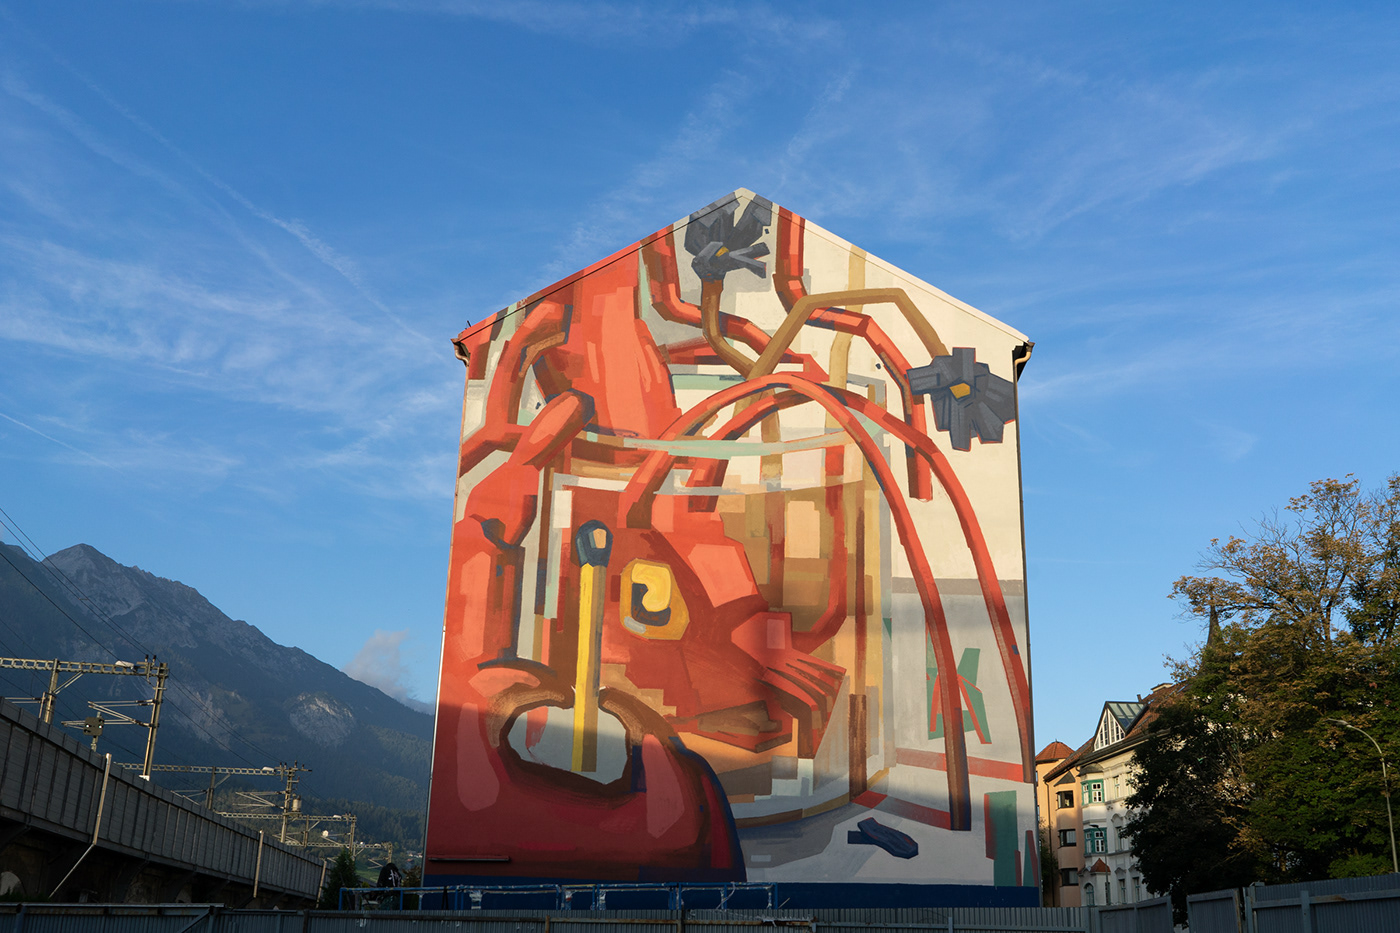 Mural by MOTS & HNRX for Underbridge 2021 in Innsbruck